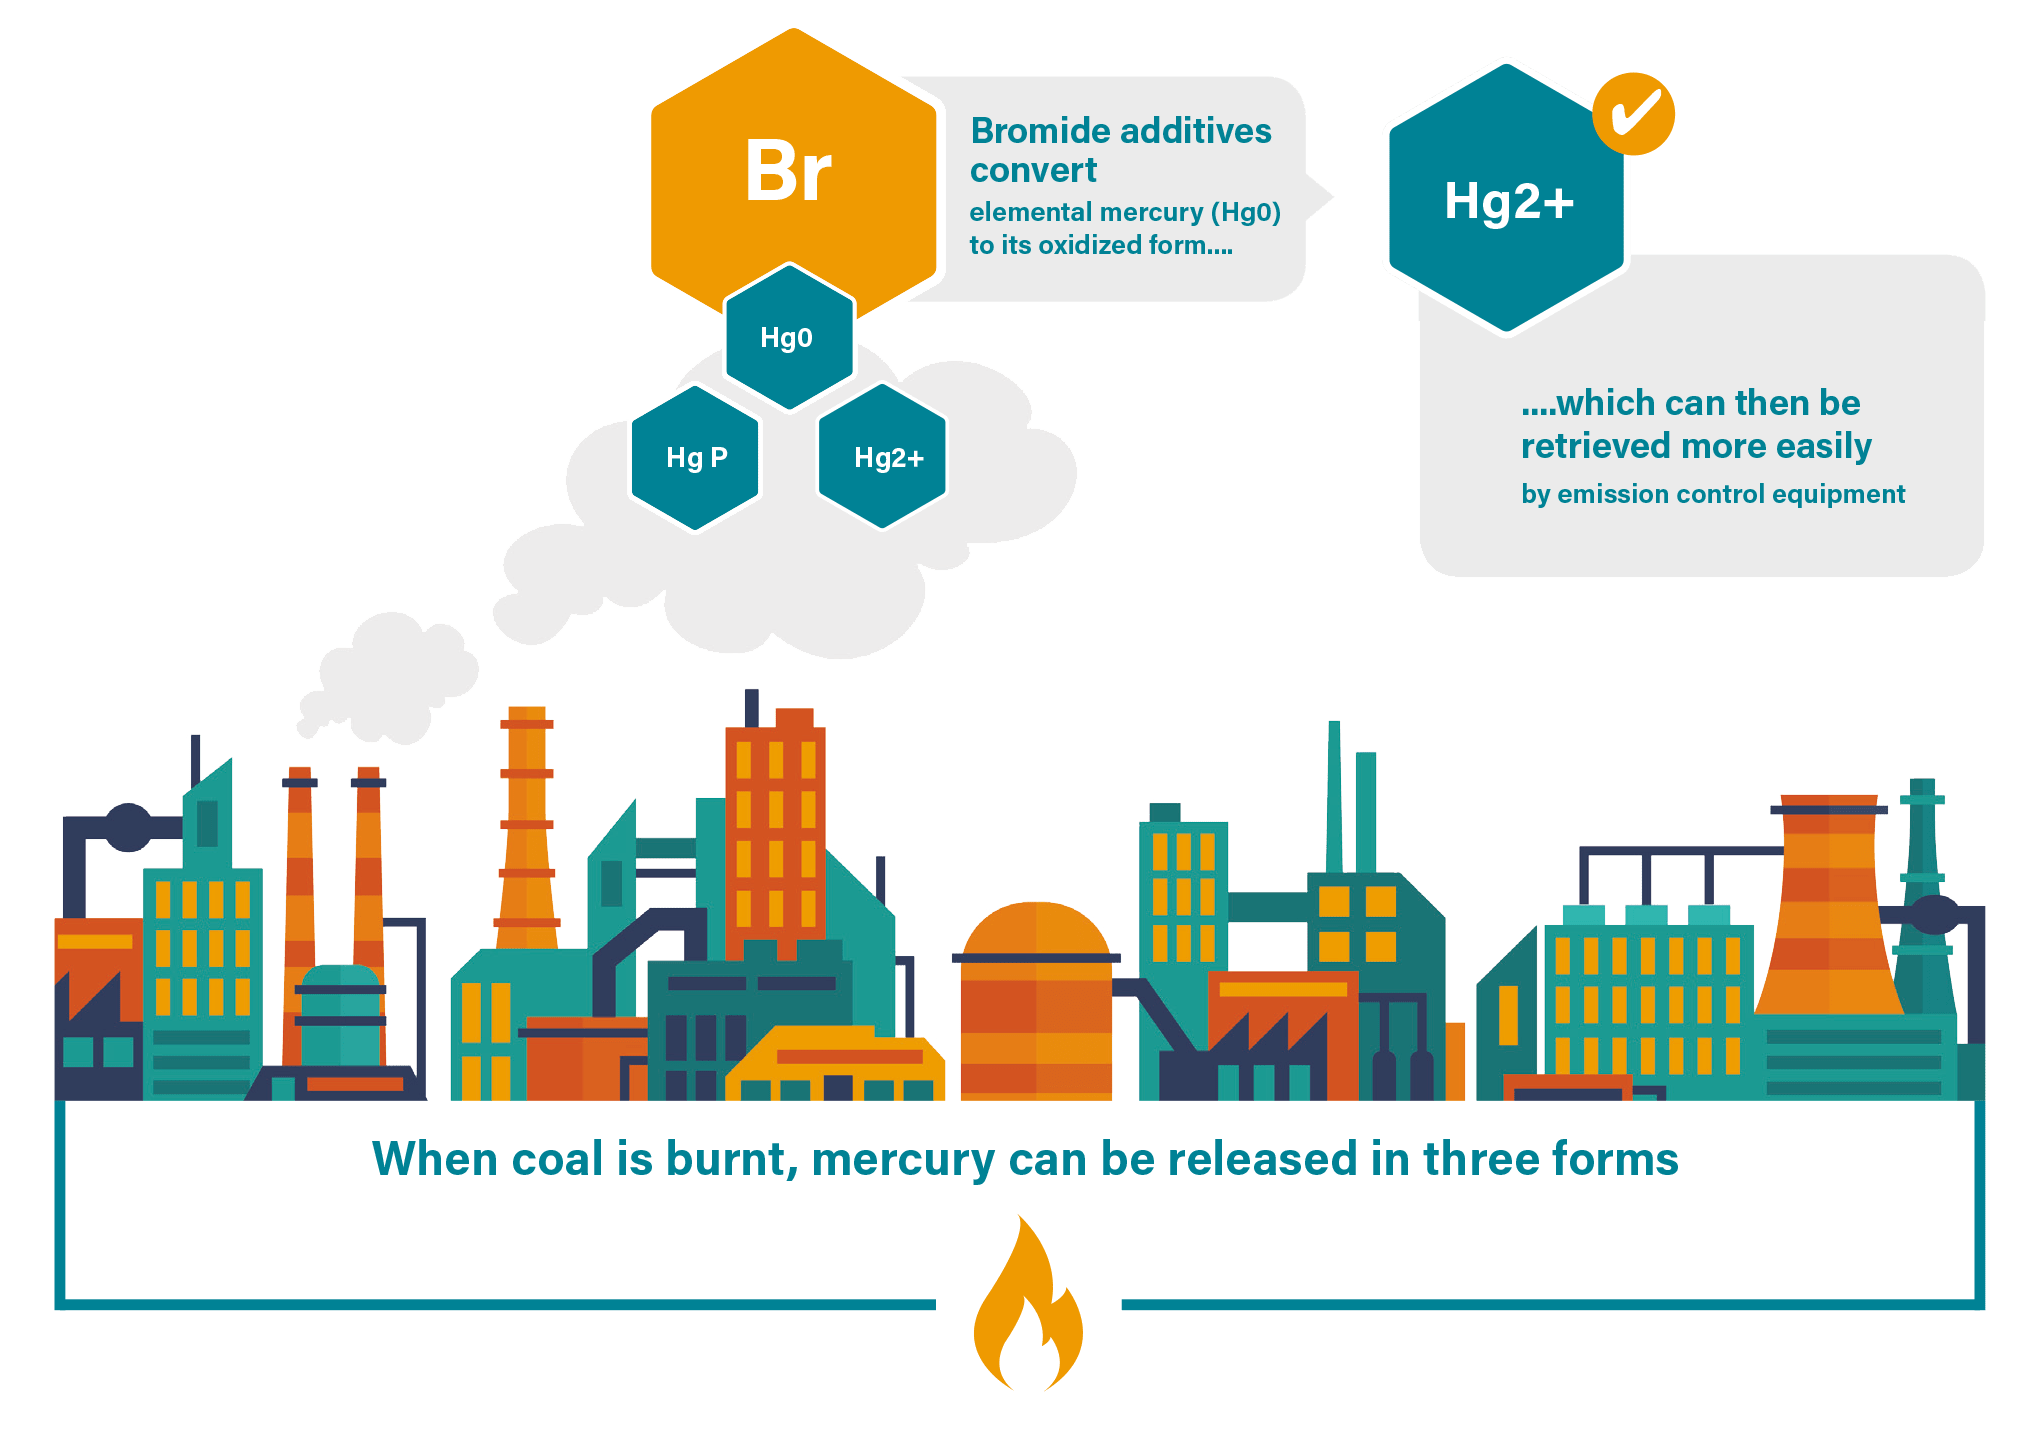 Bromine BSEF mercury emission pollution reduction minamata coal combustion 2